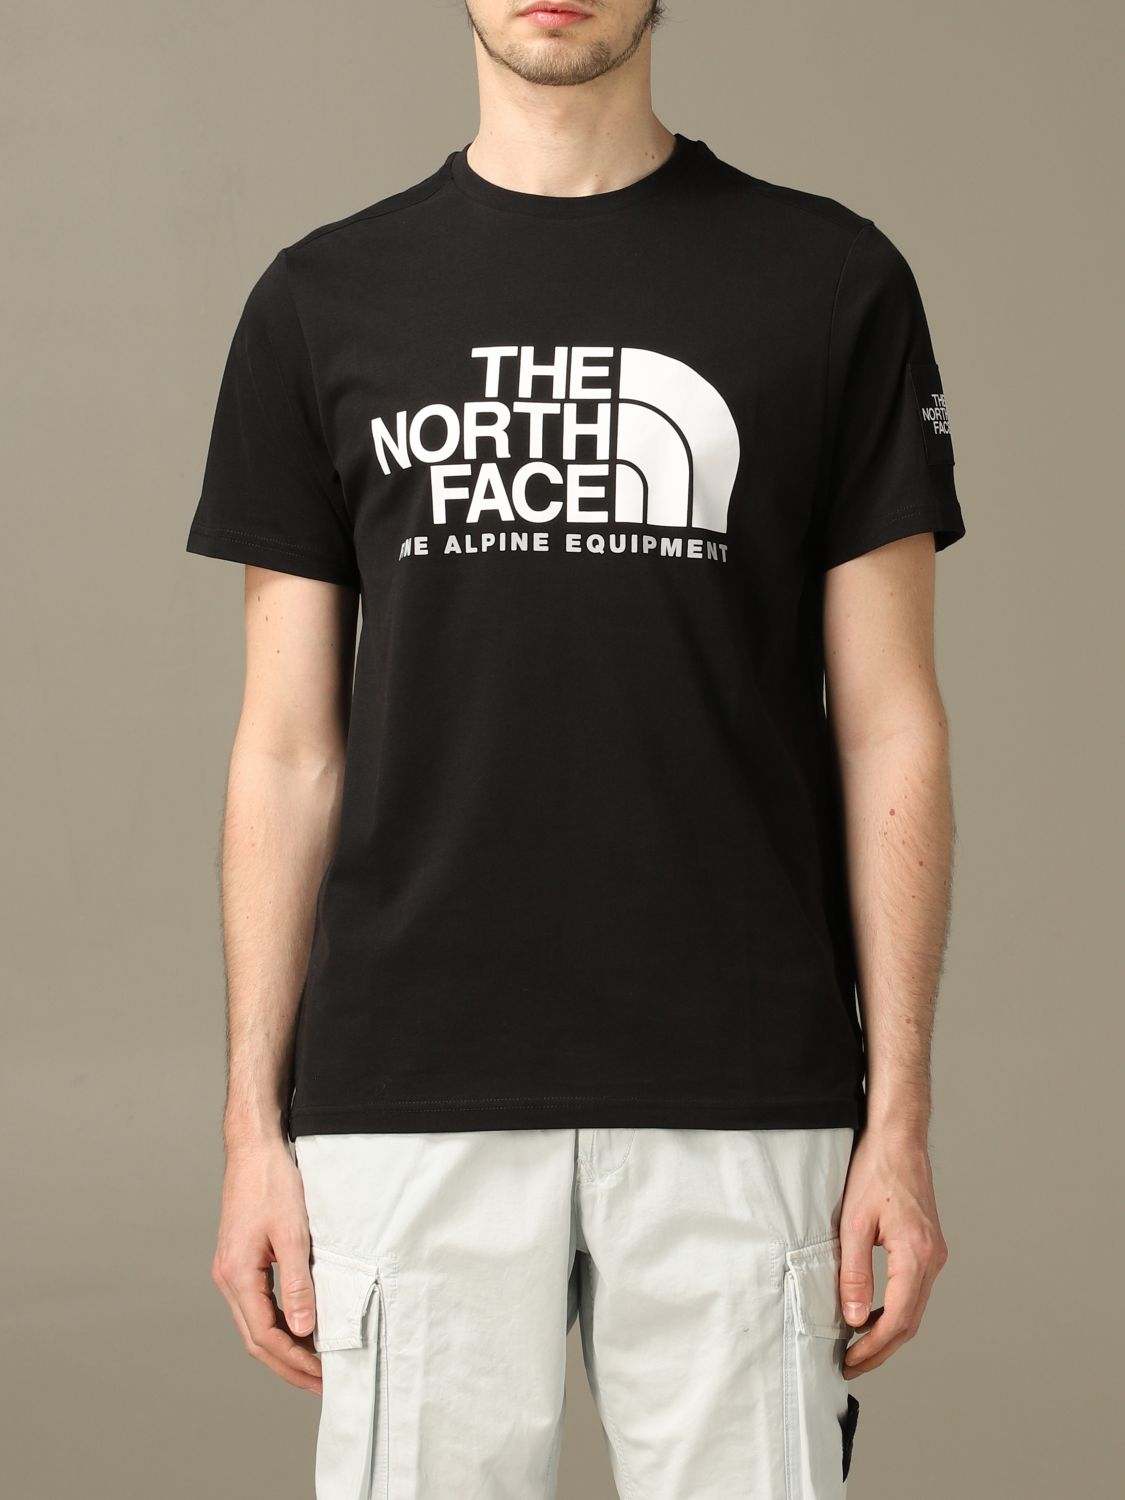 black north face t shirt